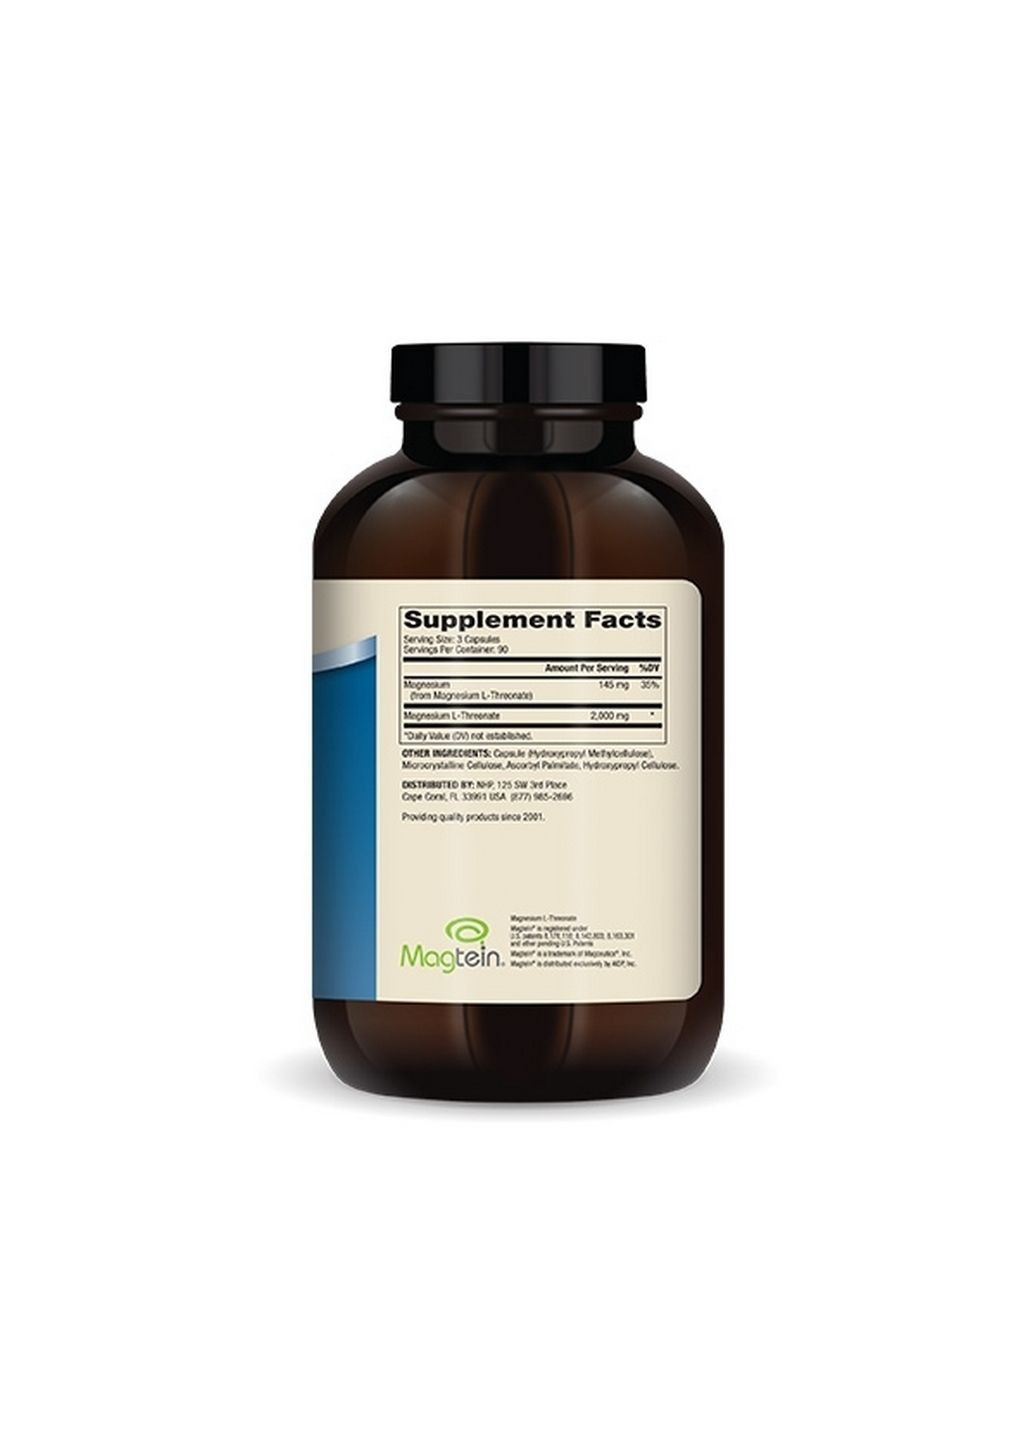 Вітаміни та мінерали Magnesium L-Threonate, 270 капсул Dr. Mercola (293418889)